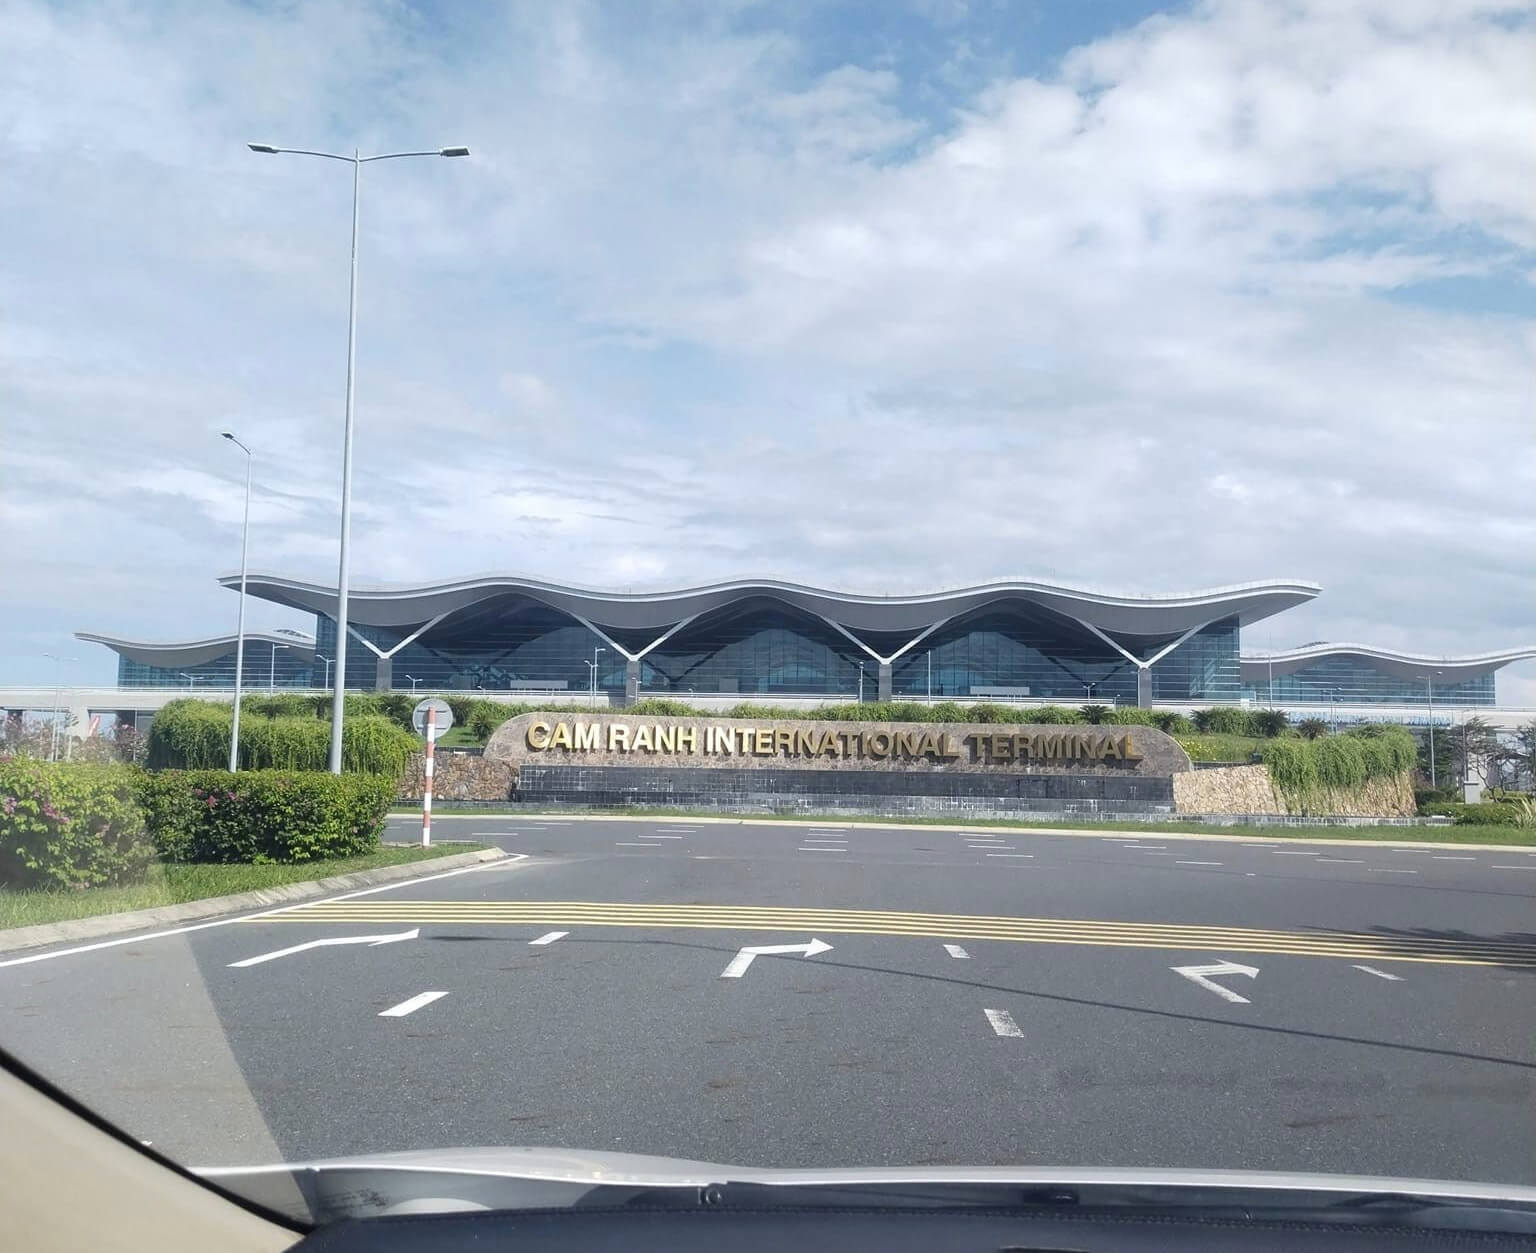 Canh Ranh International Airport